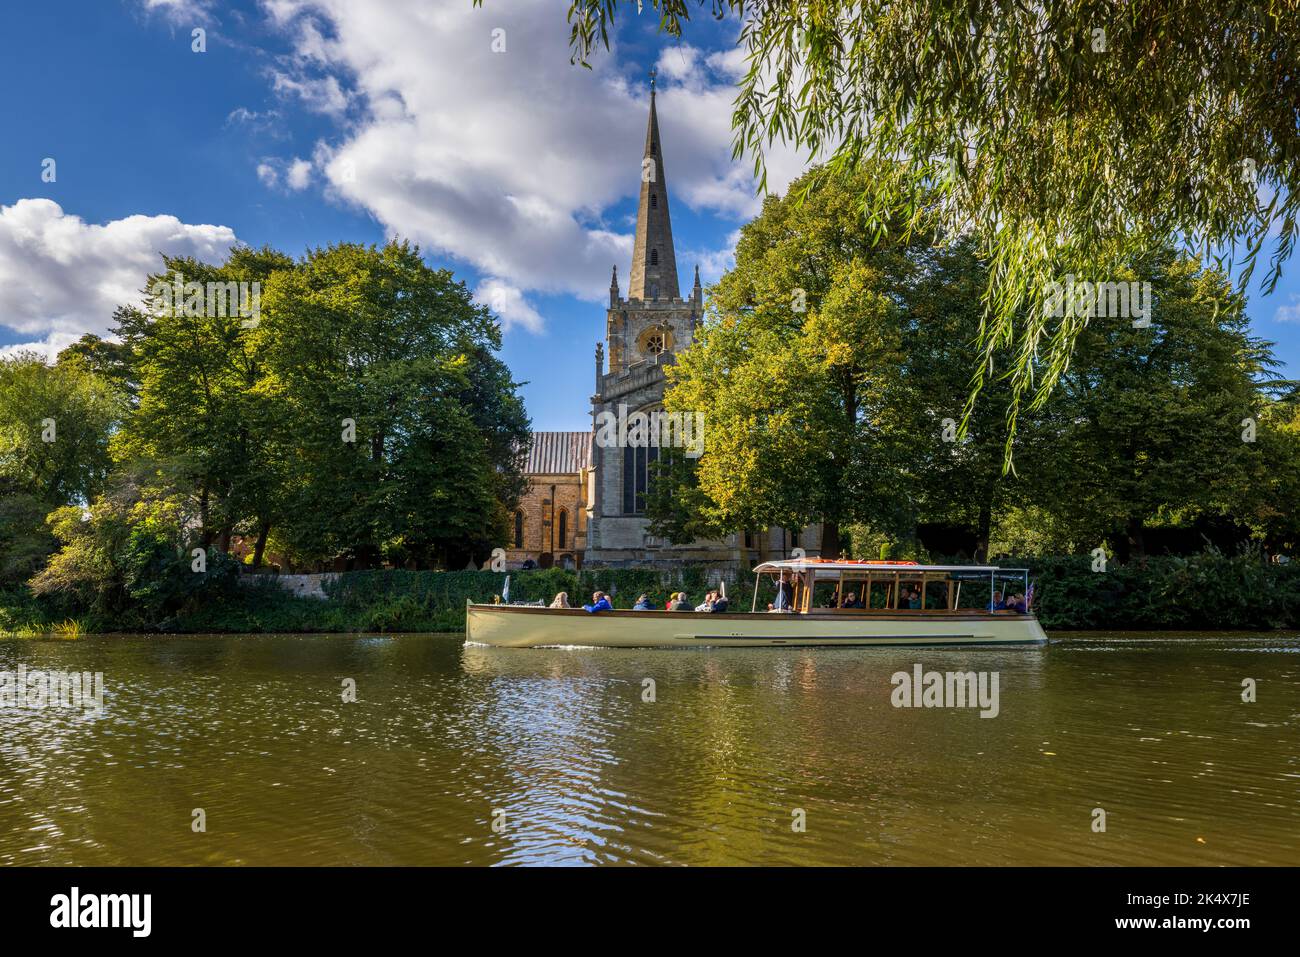 A River Cruise boat passing Holy Trinity church at Stratford upon Avon, Warwickshire, England Stock Photo